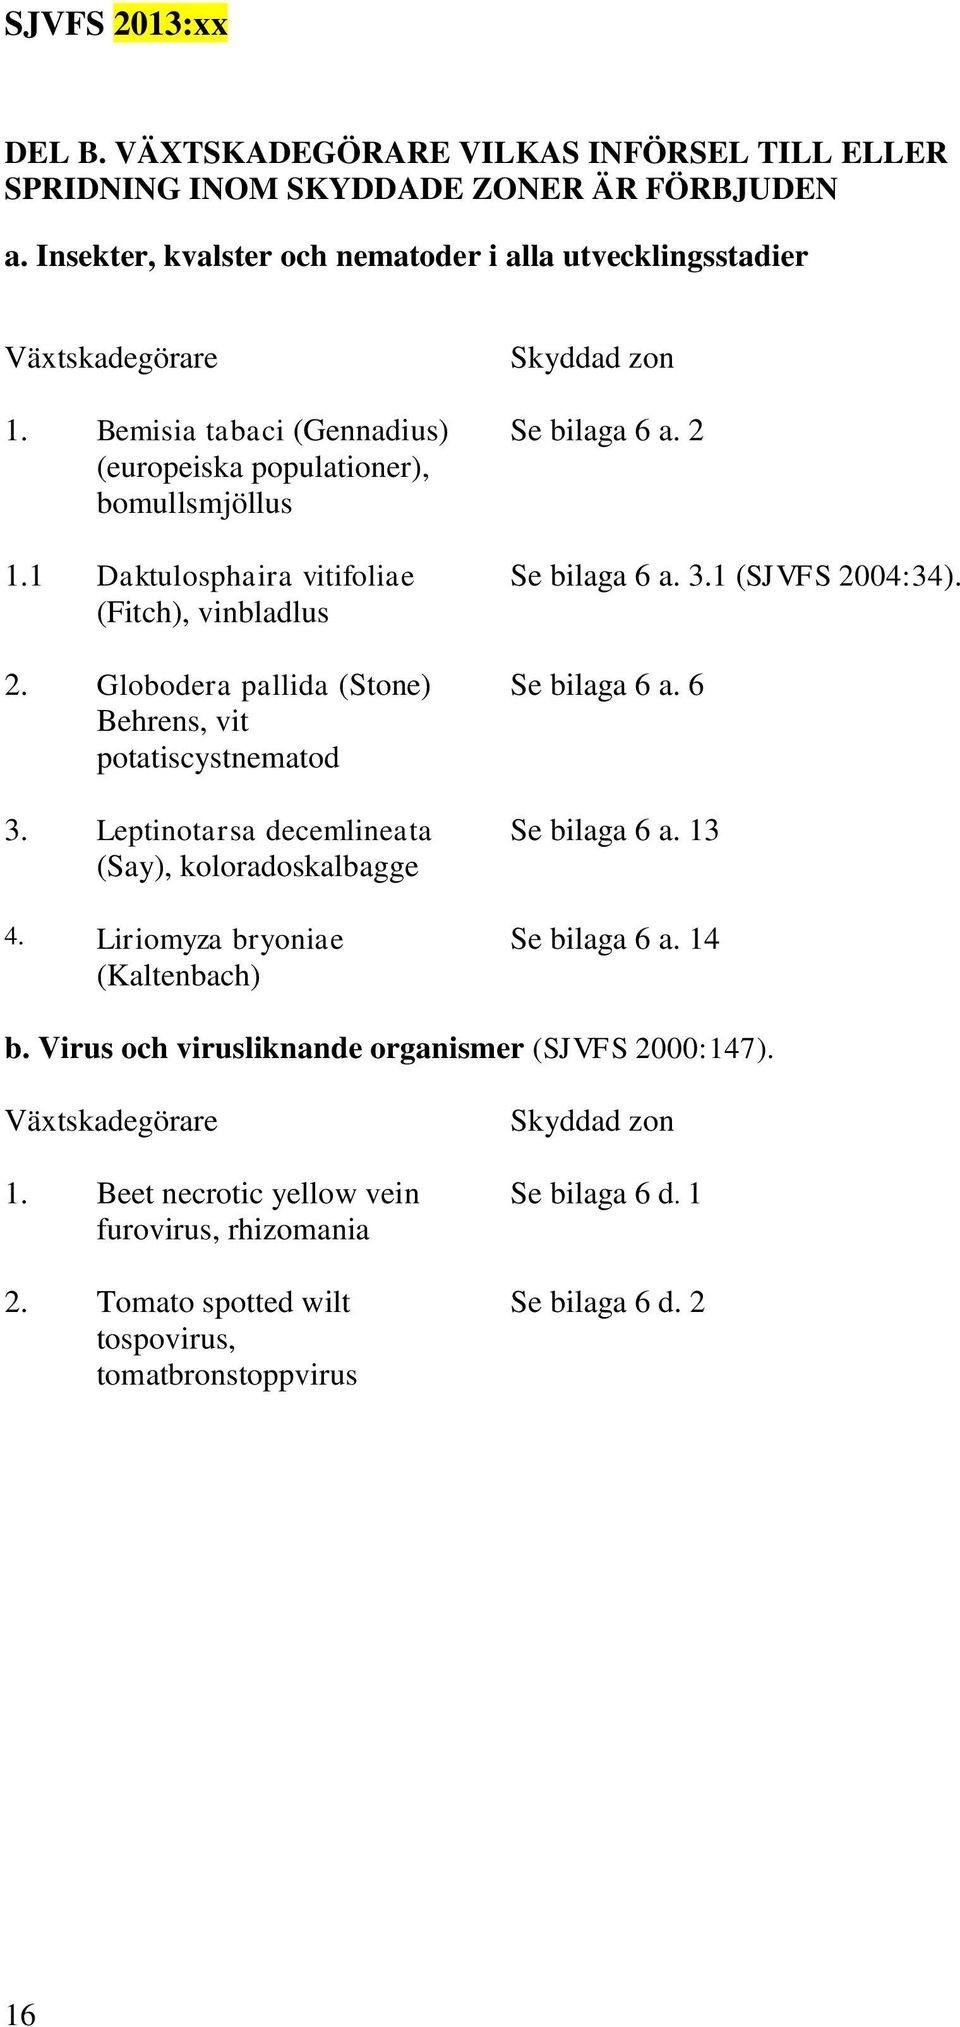 Leptinotarsa decemlineata (Say), koloradoskalbagge 4. Liriomyza bryoniae (Kaltenbach) Skyddad zon Se bilaga 6 a. 2 Se bilaga 6 a. 3.1 (SJVFS 2004:34). Se bilaga 6 a. 6 Se bilaga 6 a.